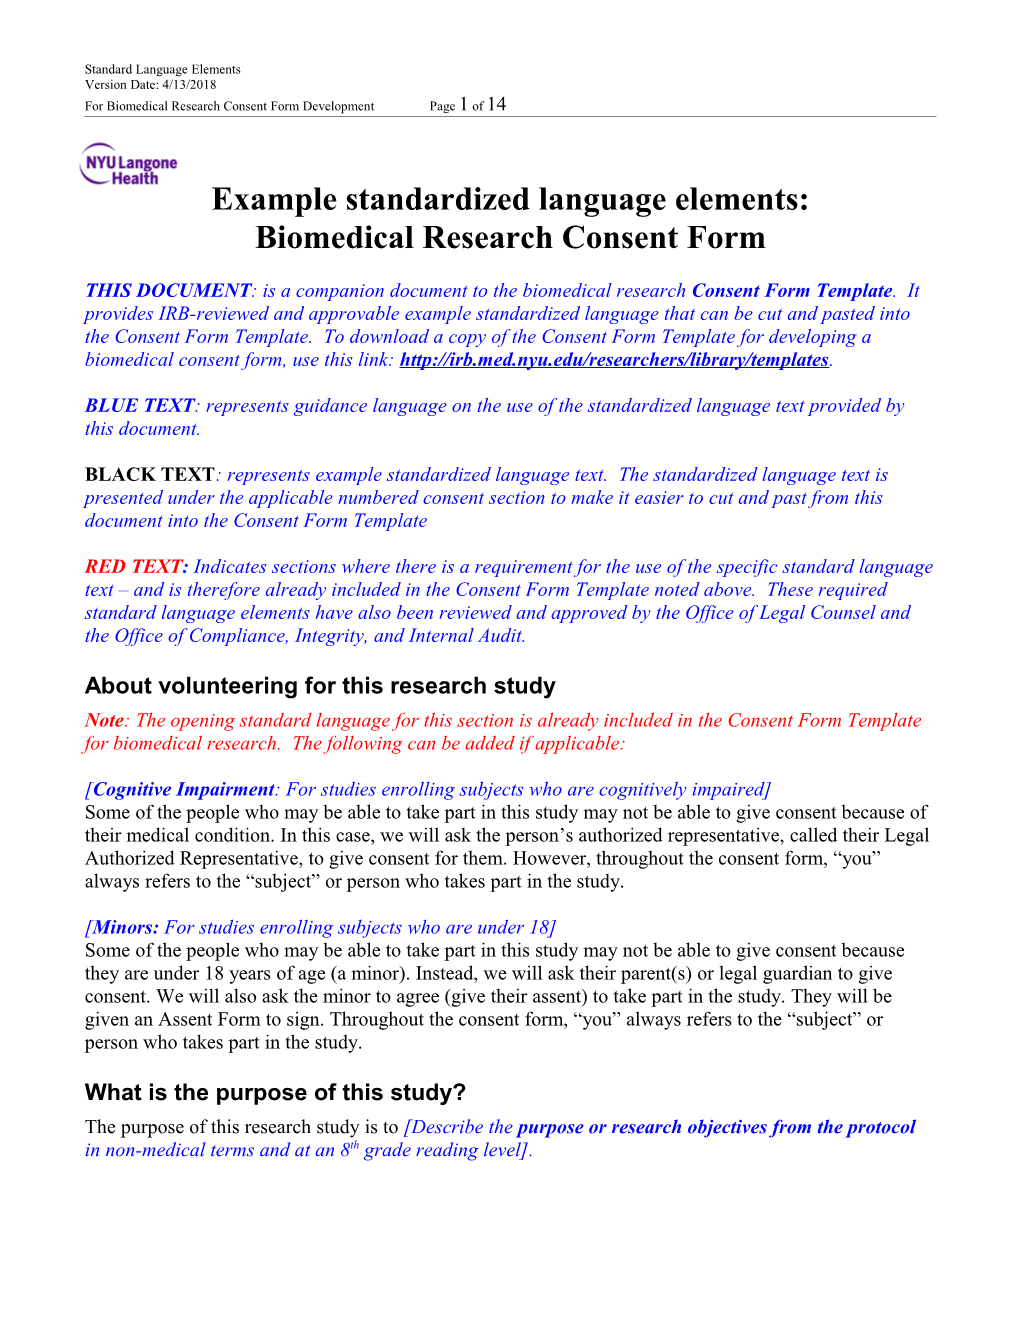 Standard Language Elements Version Date: 4/13/2018